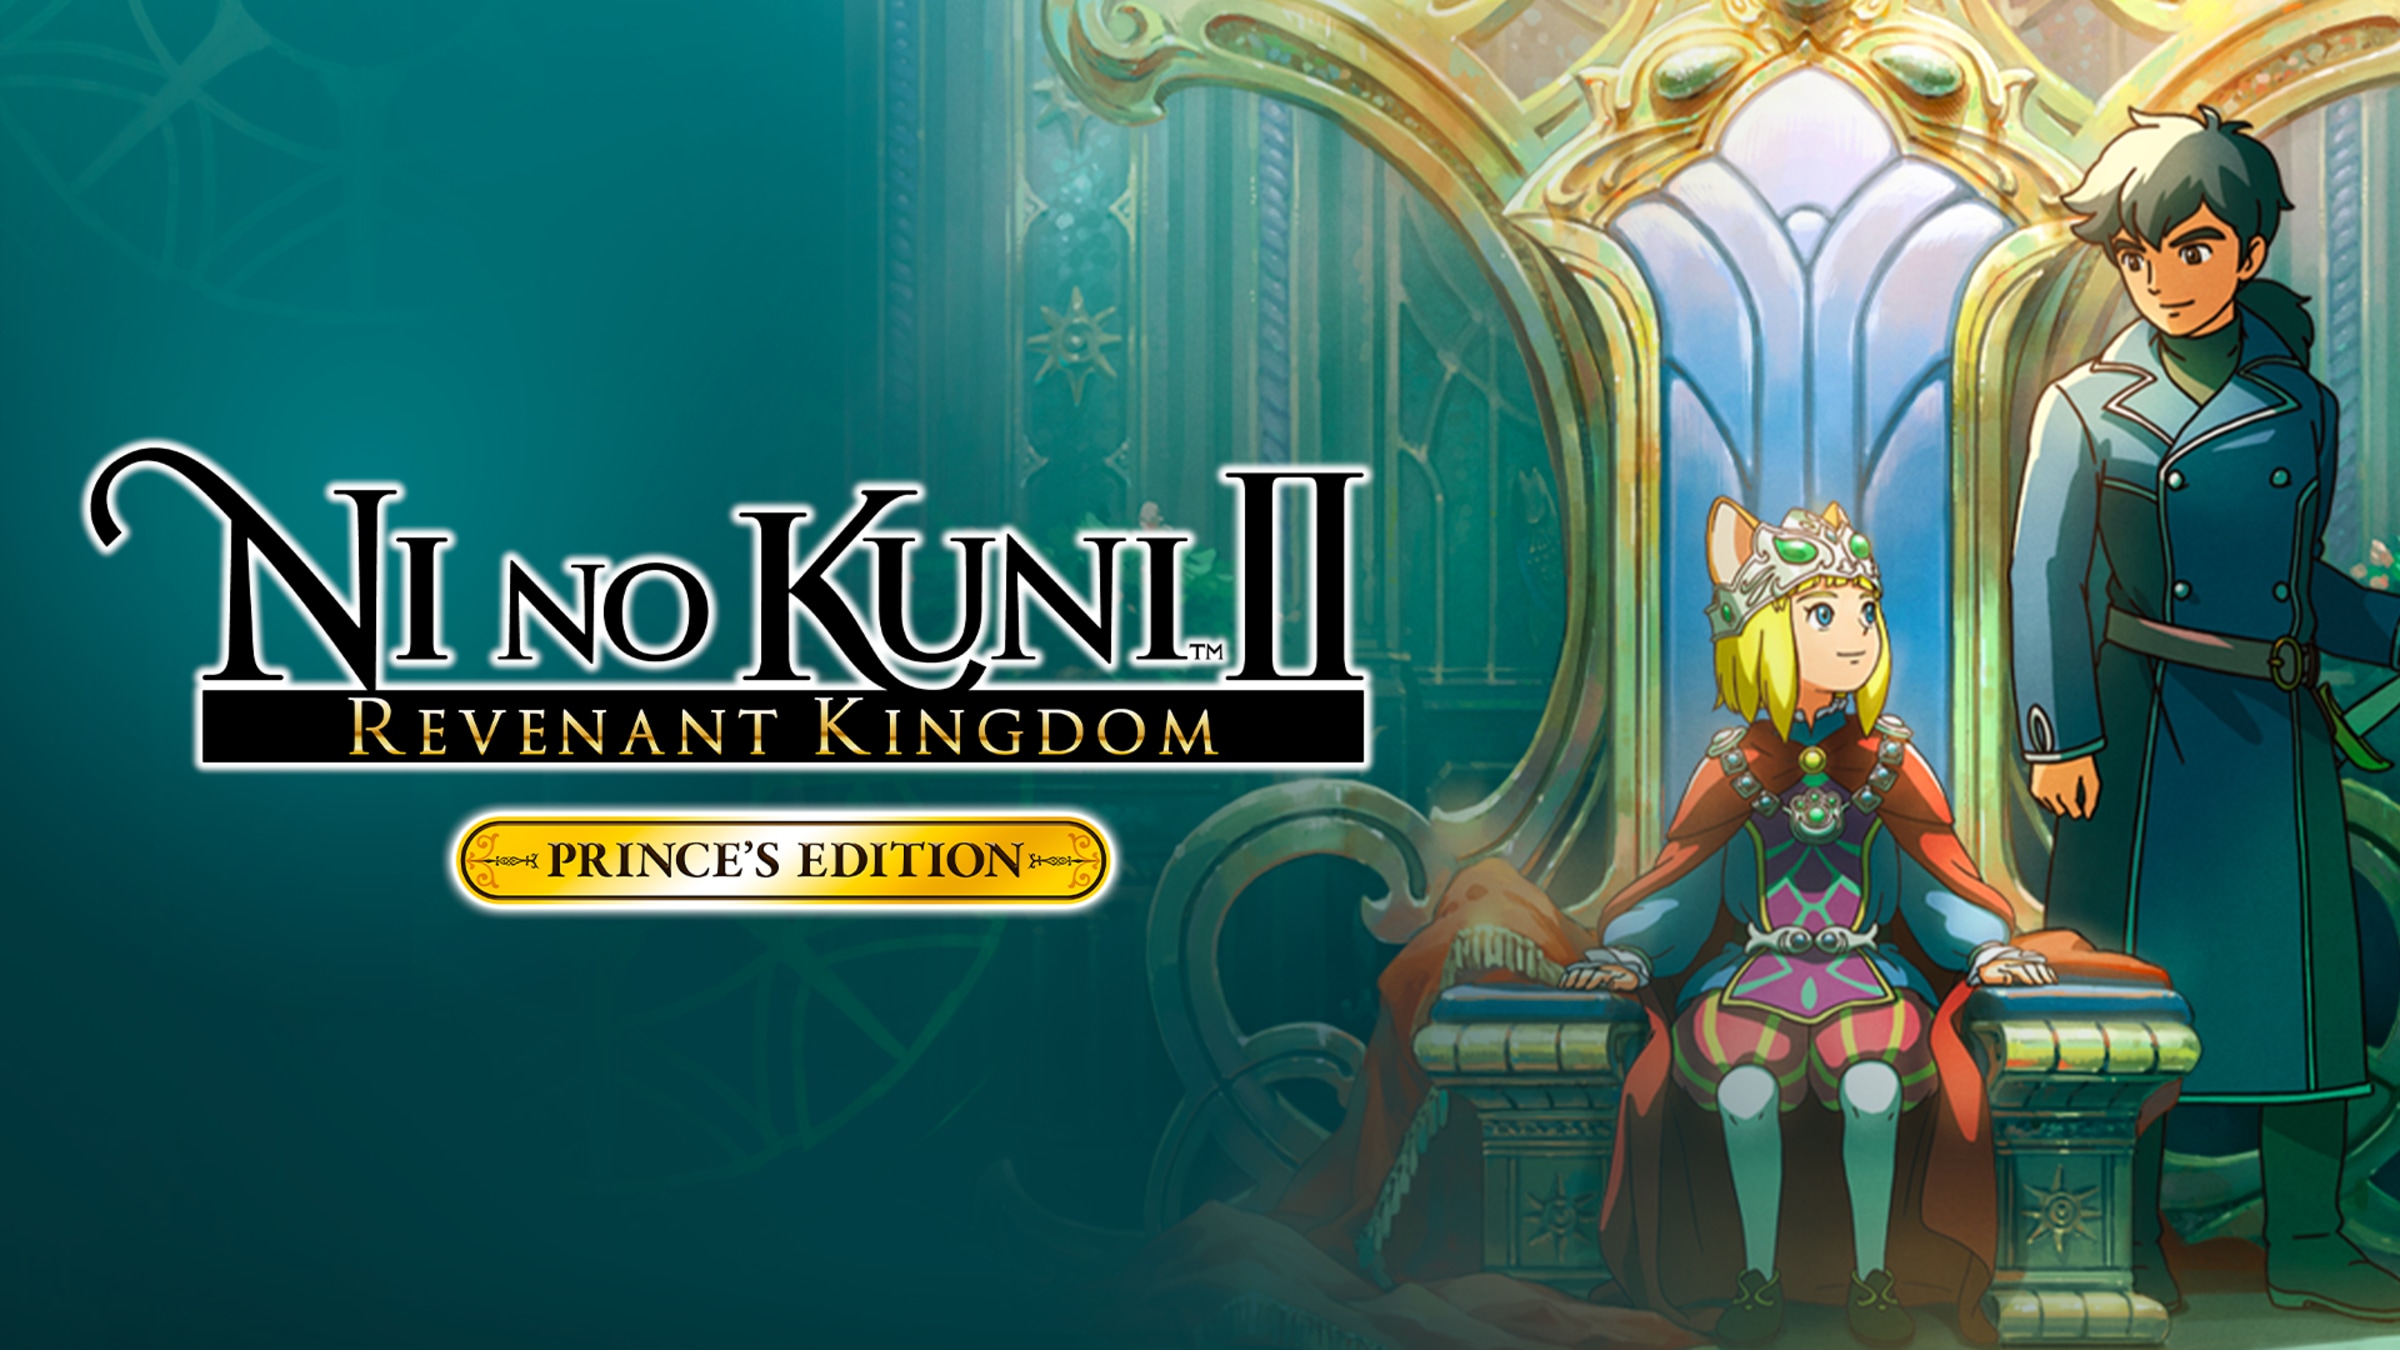 Ni no Kuni™ II: Revenant Kingdom PRINCE'S EDITION for Nintendo Switch - Nintendo Official Site